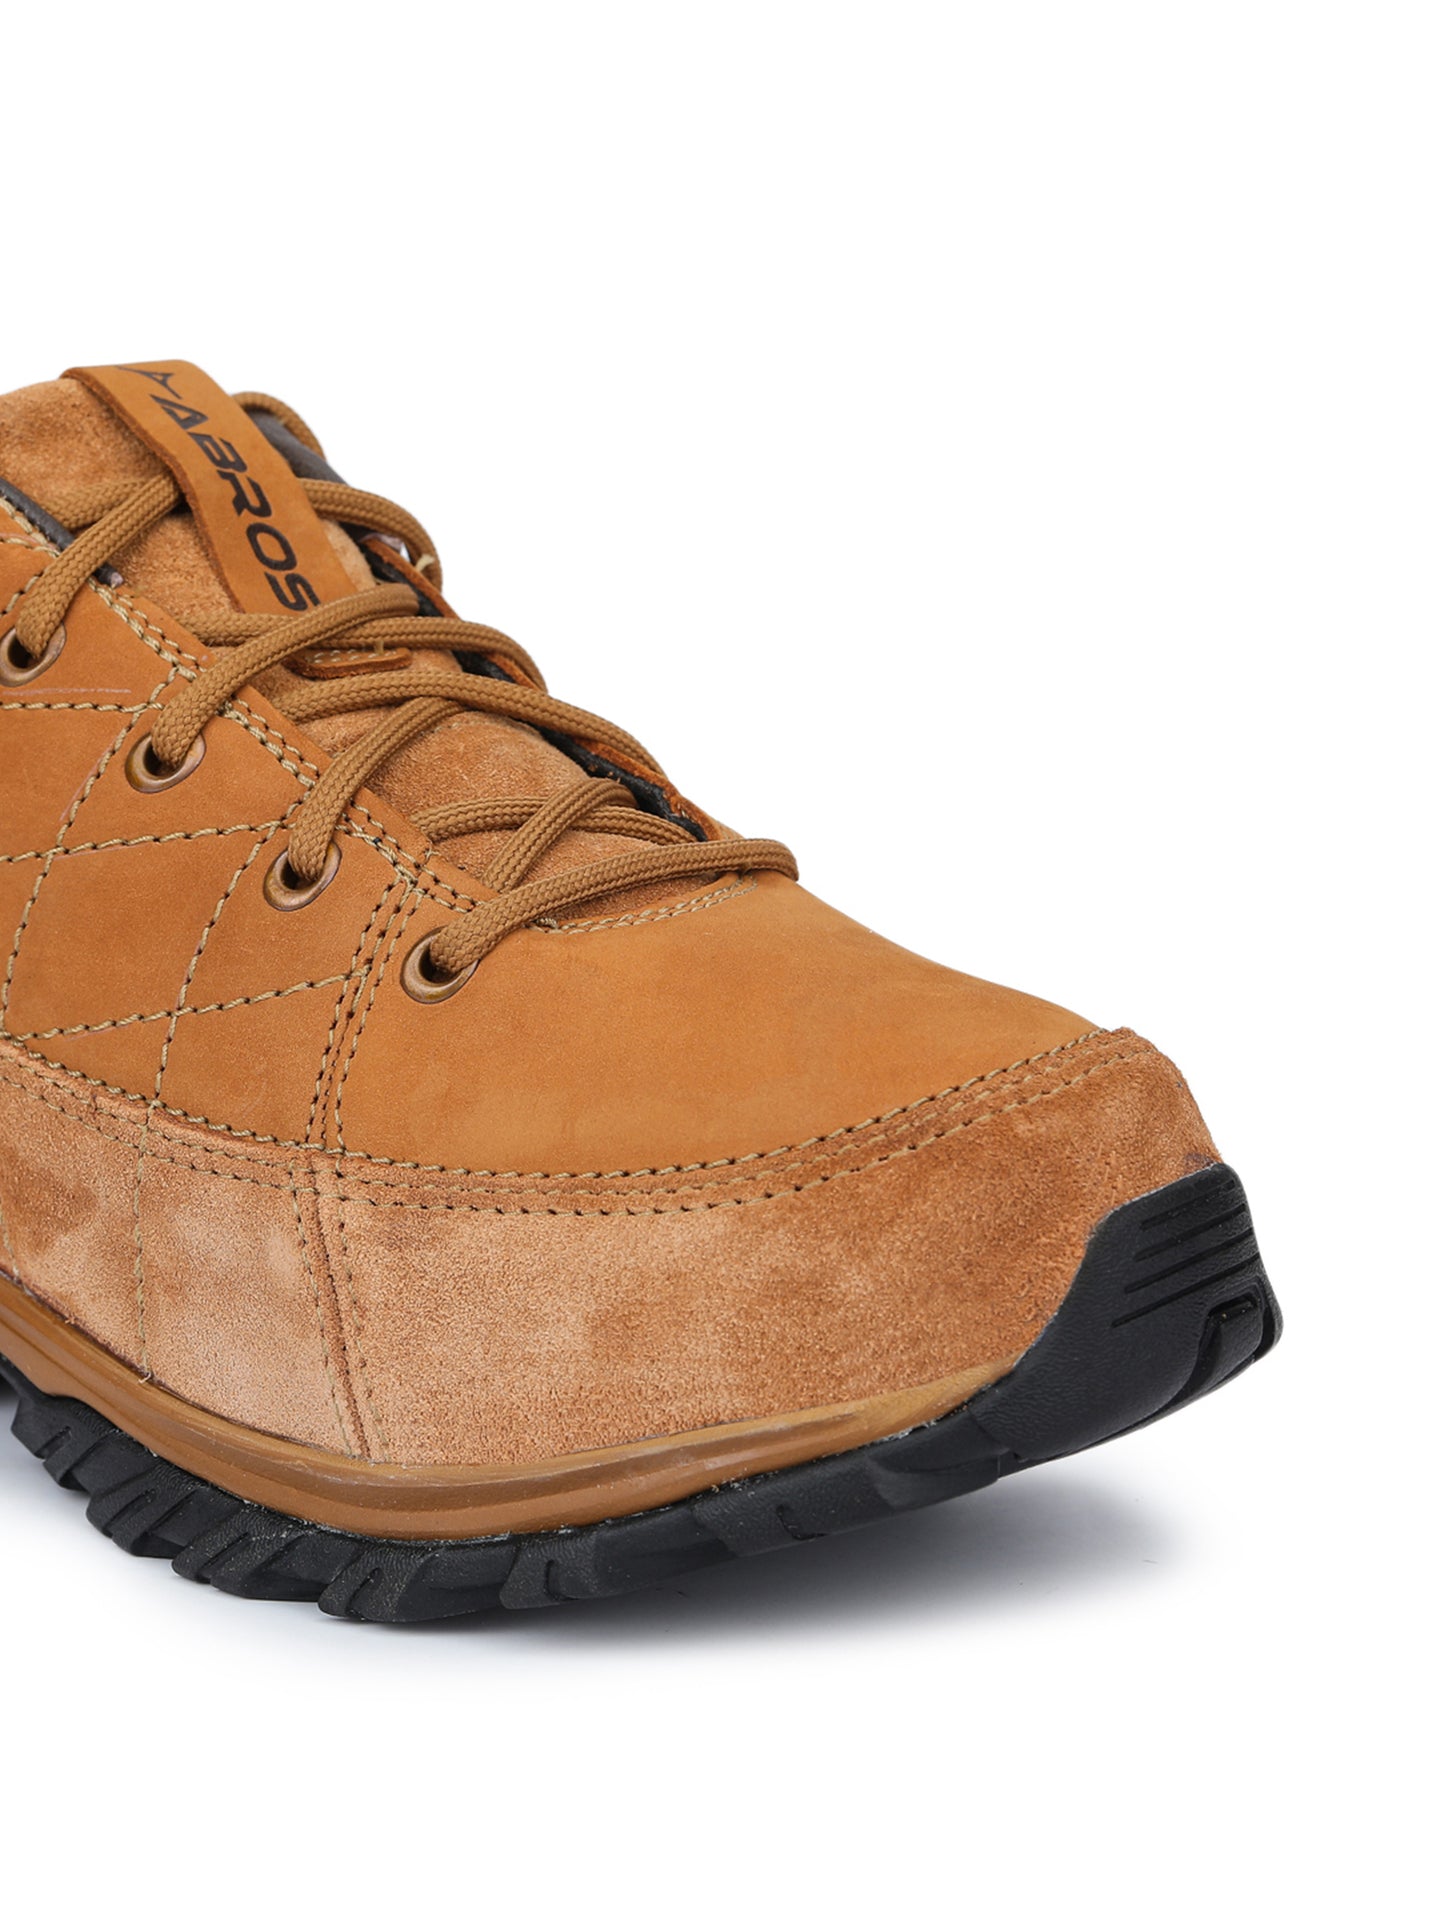 Nardoo Outdoor-Shoes For Men's